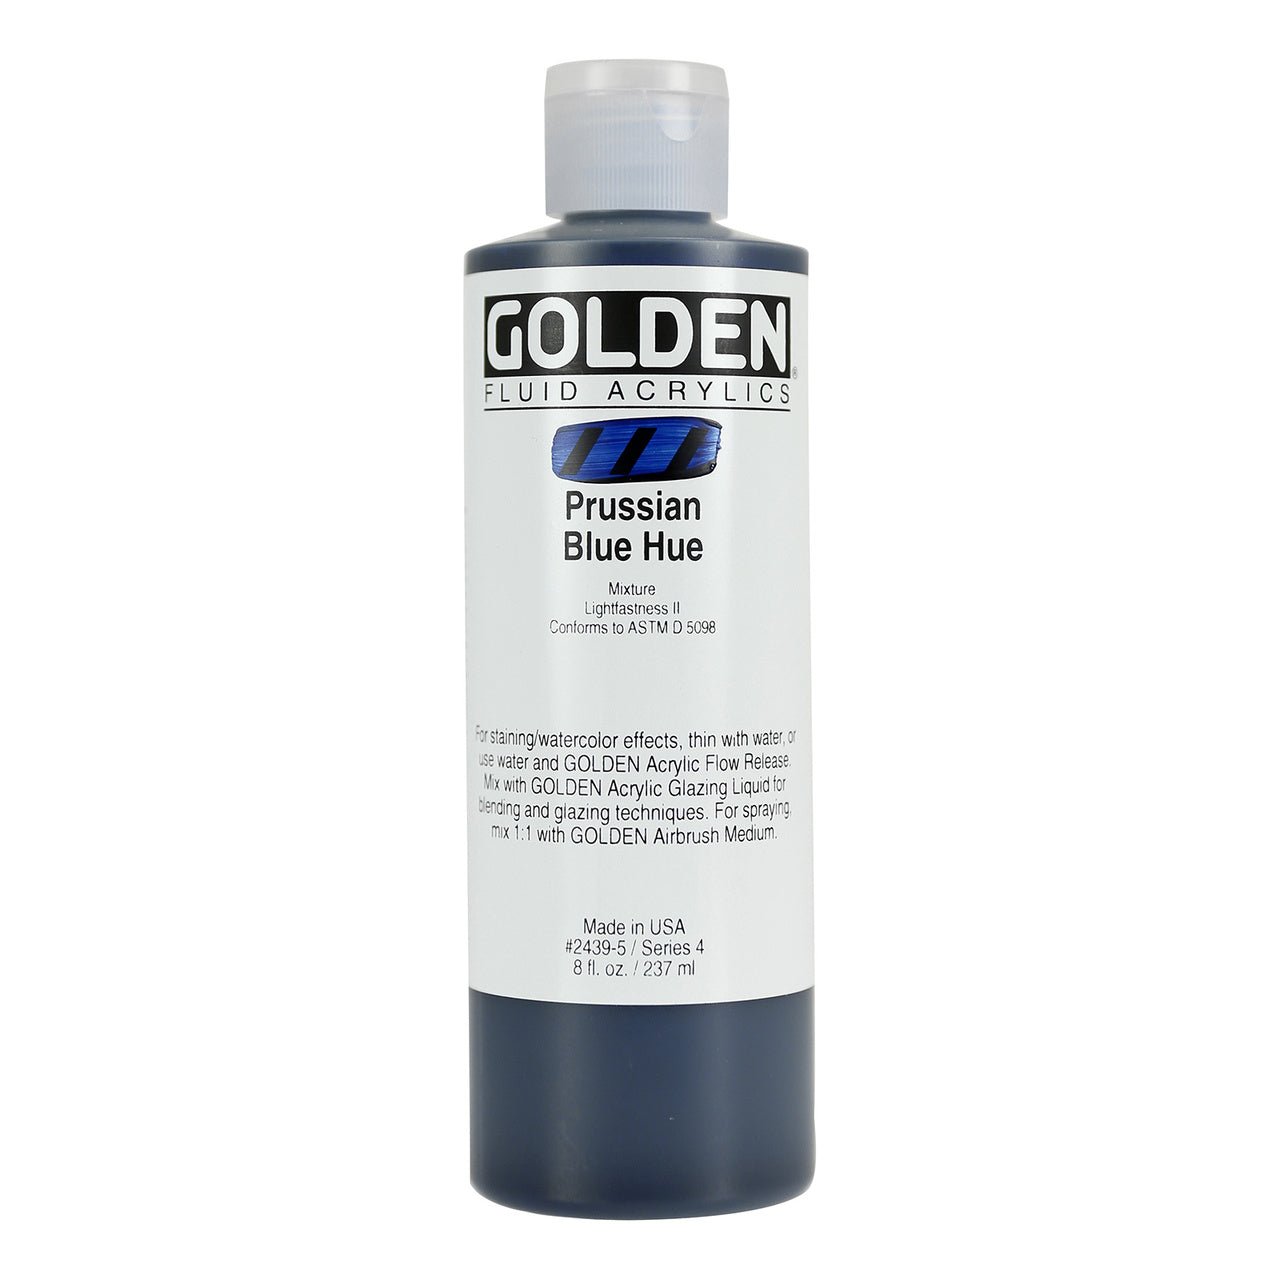 Golden Fluid Acrylic Prussian Blue Hue 8 oz - merriartist.com